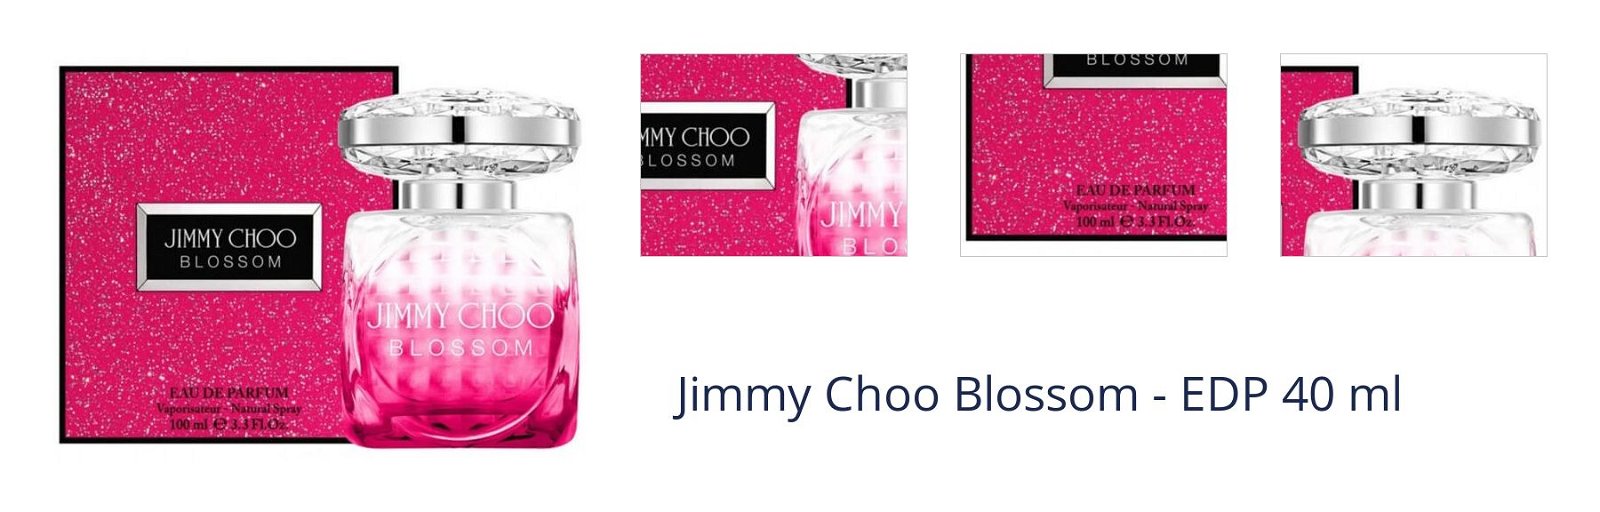 Jimmy Choo Blossom - EDP 40 ml 1